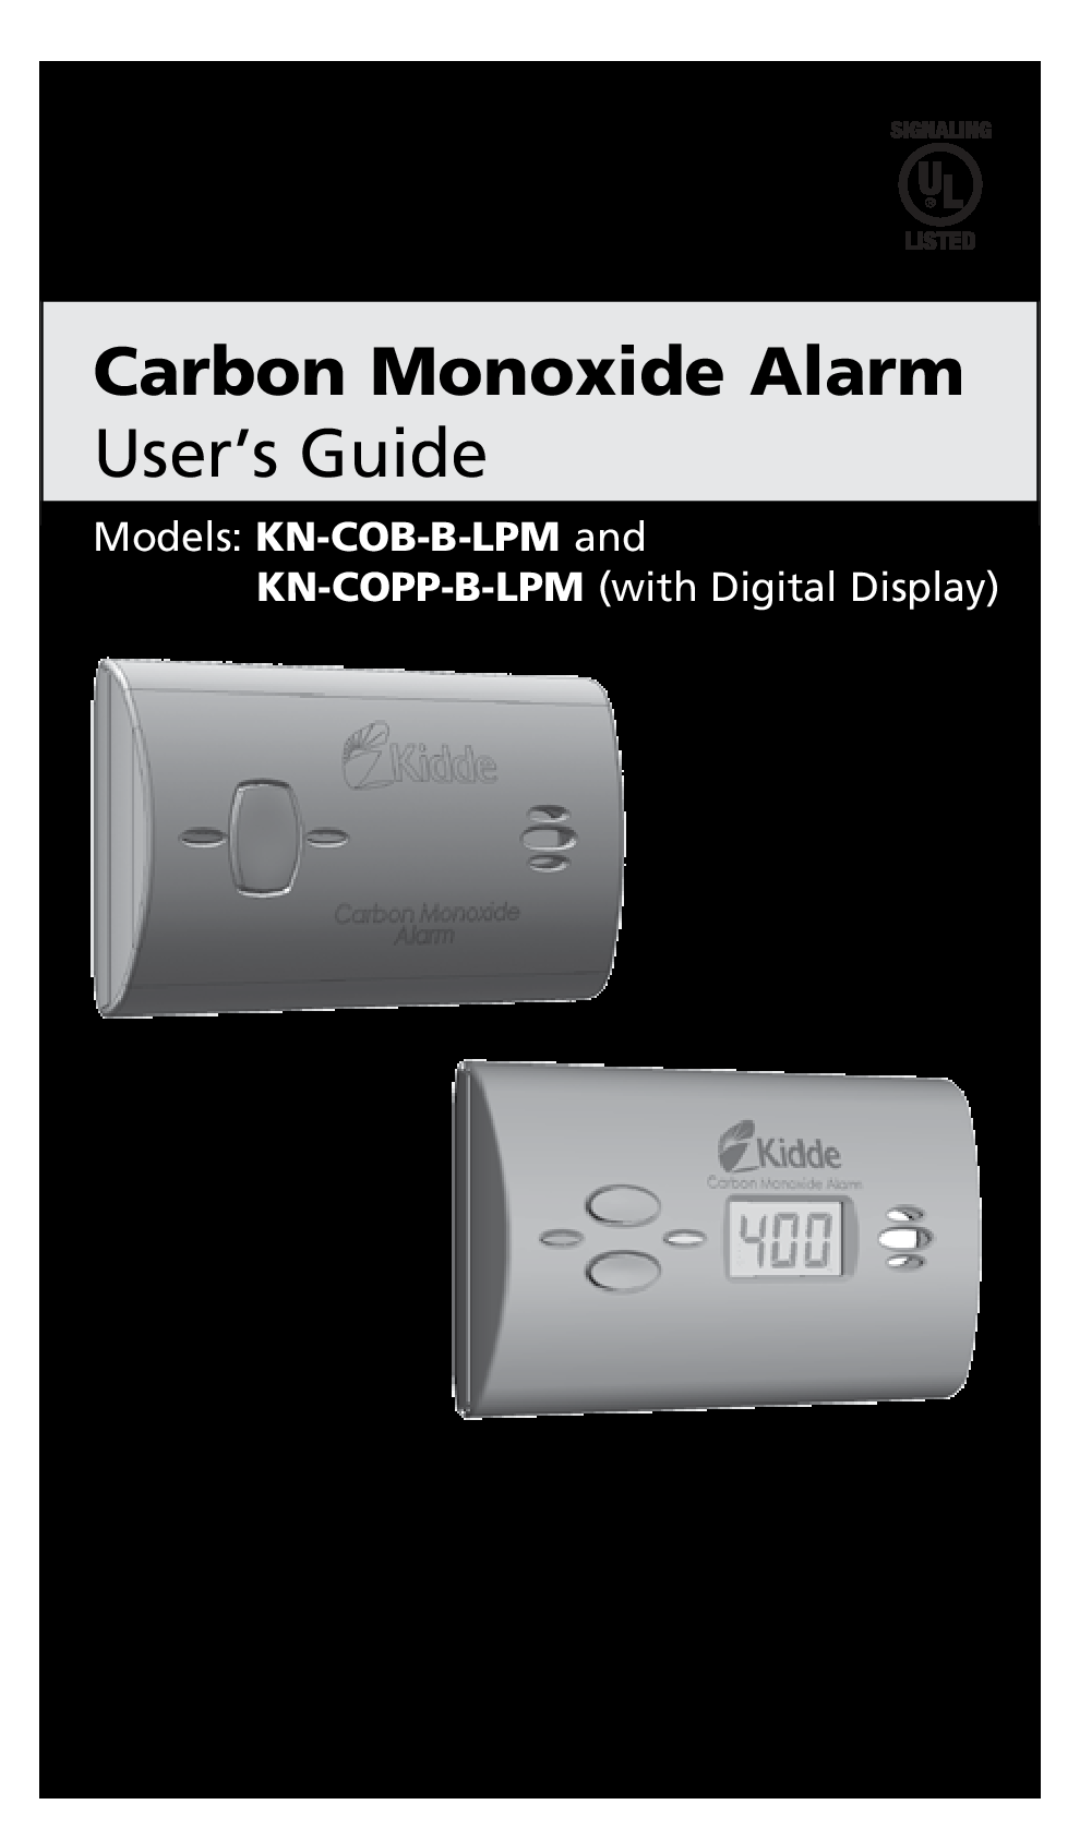 Kidde KN-COPP-B-LPM (with Digital Display) manual Models KN-COB-B-LPM and, KN-COPP-B-LPM with Digital Display 